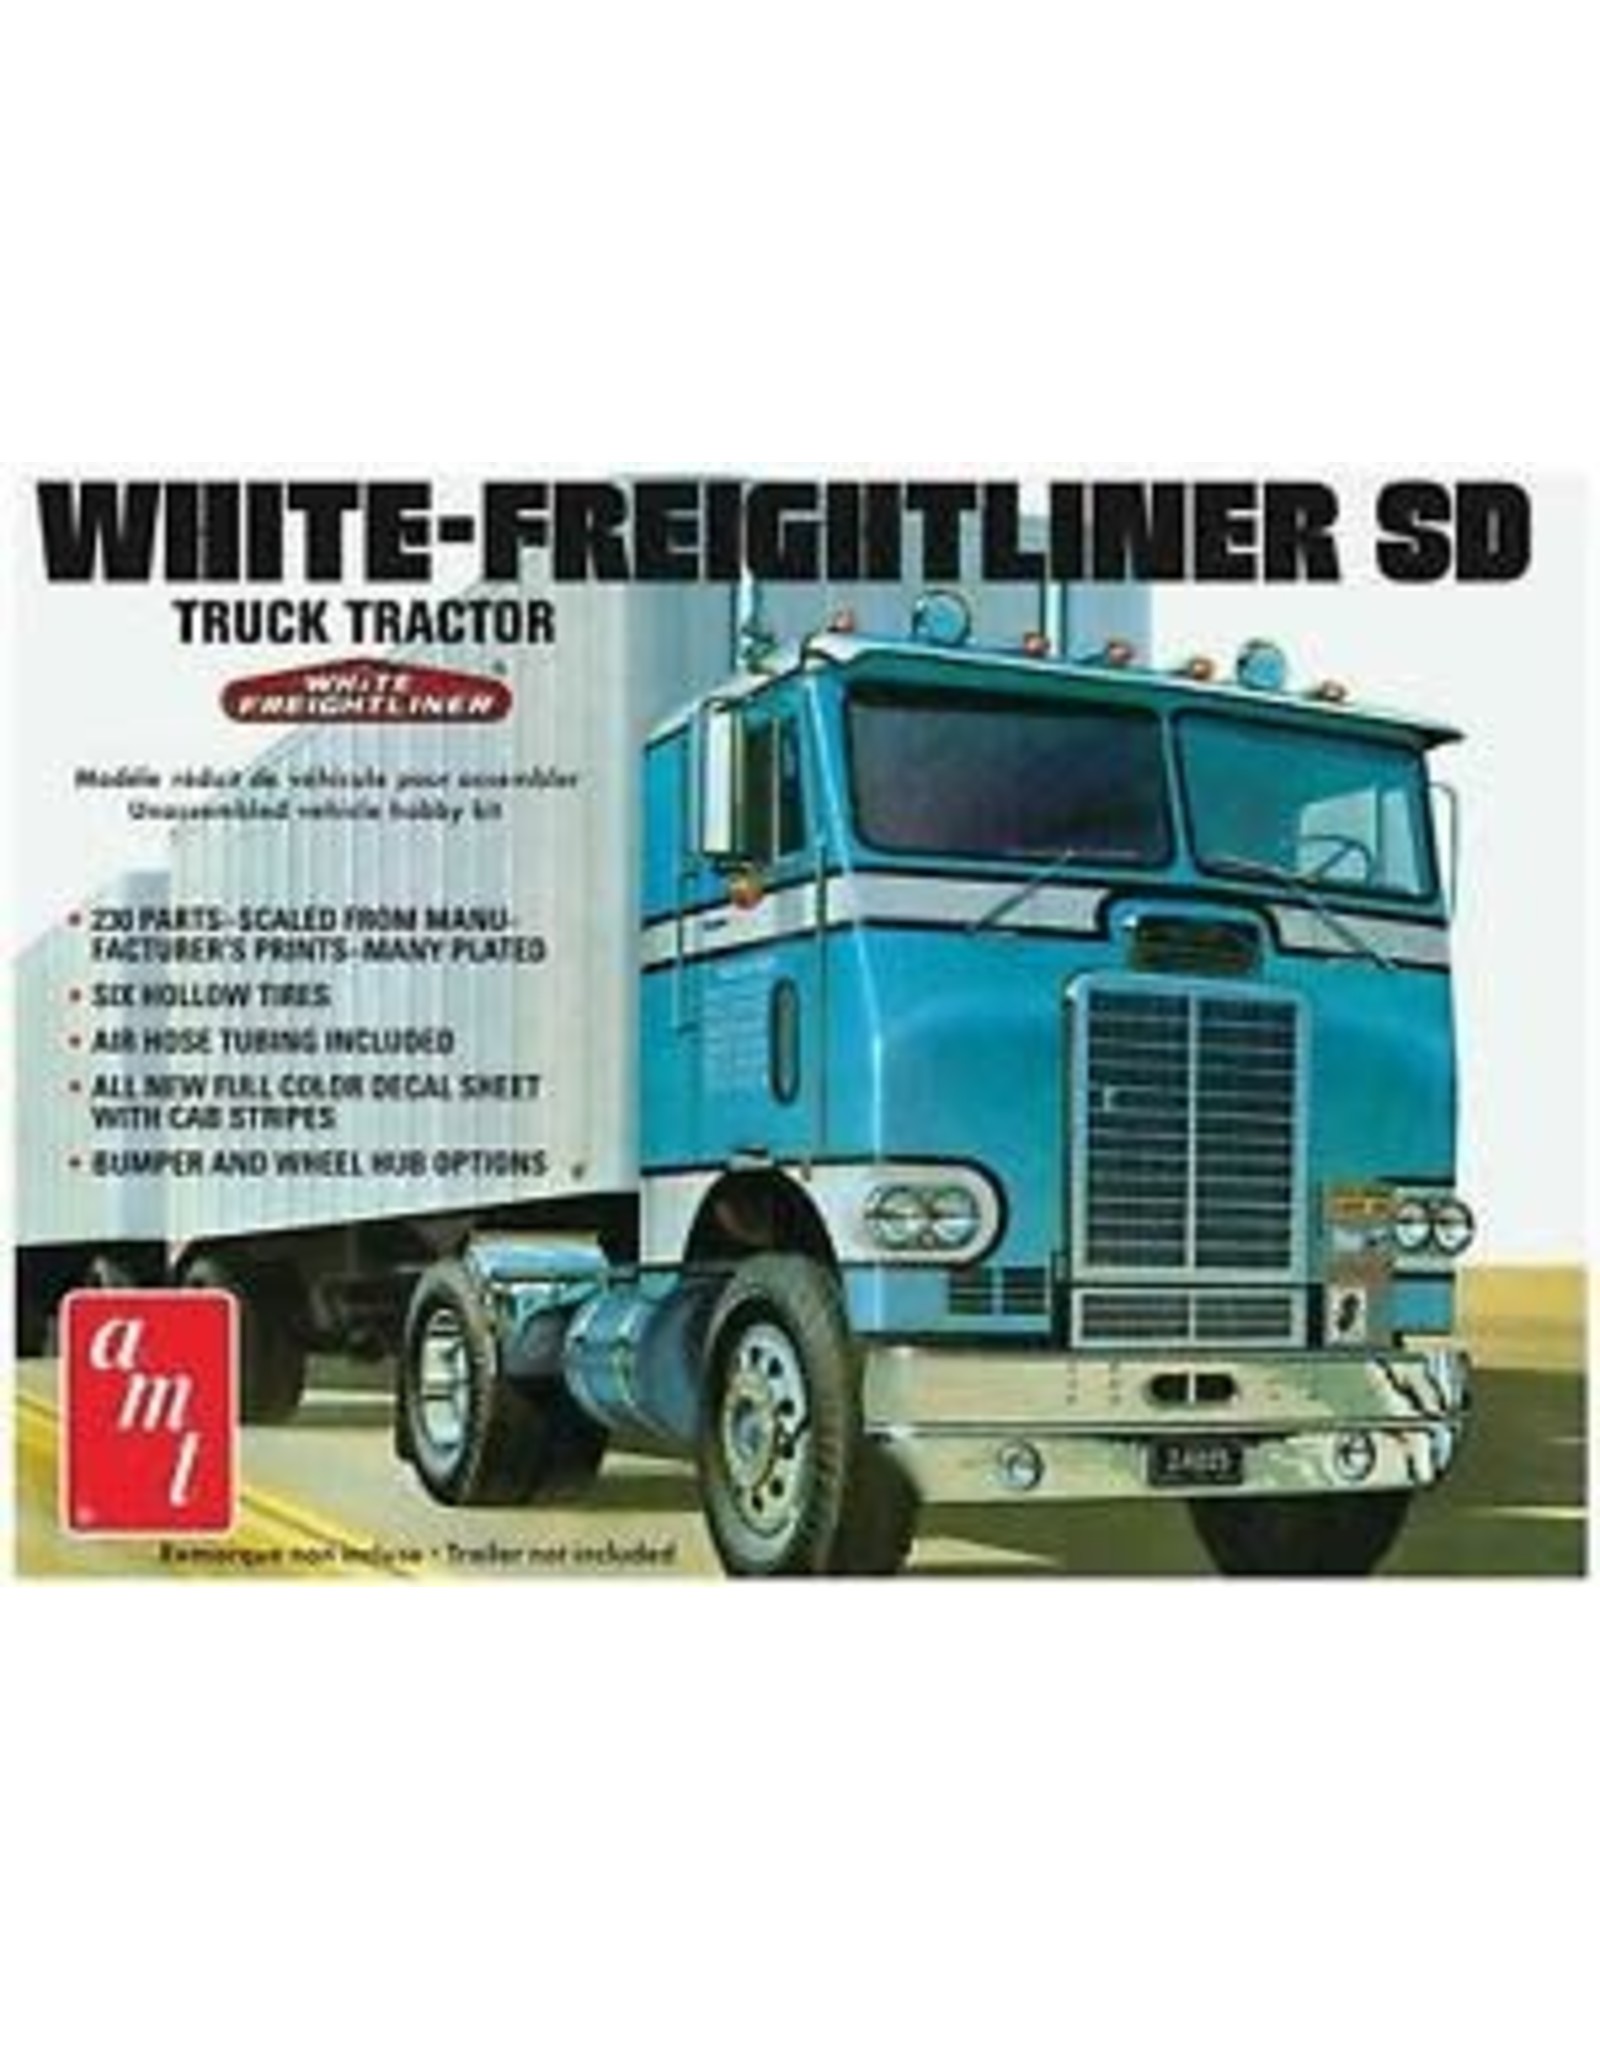 amt White freightliner SD - 1/25